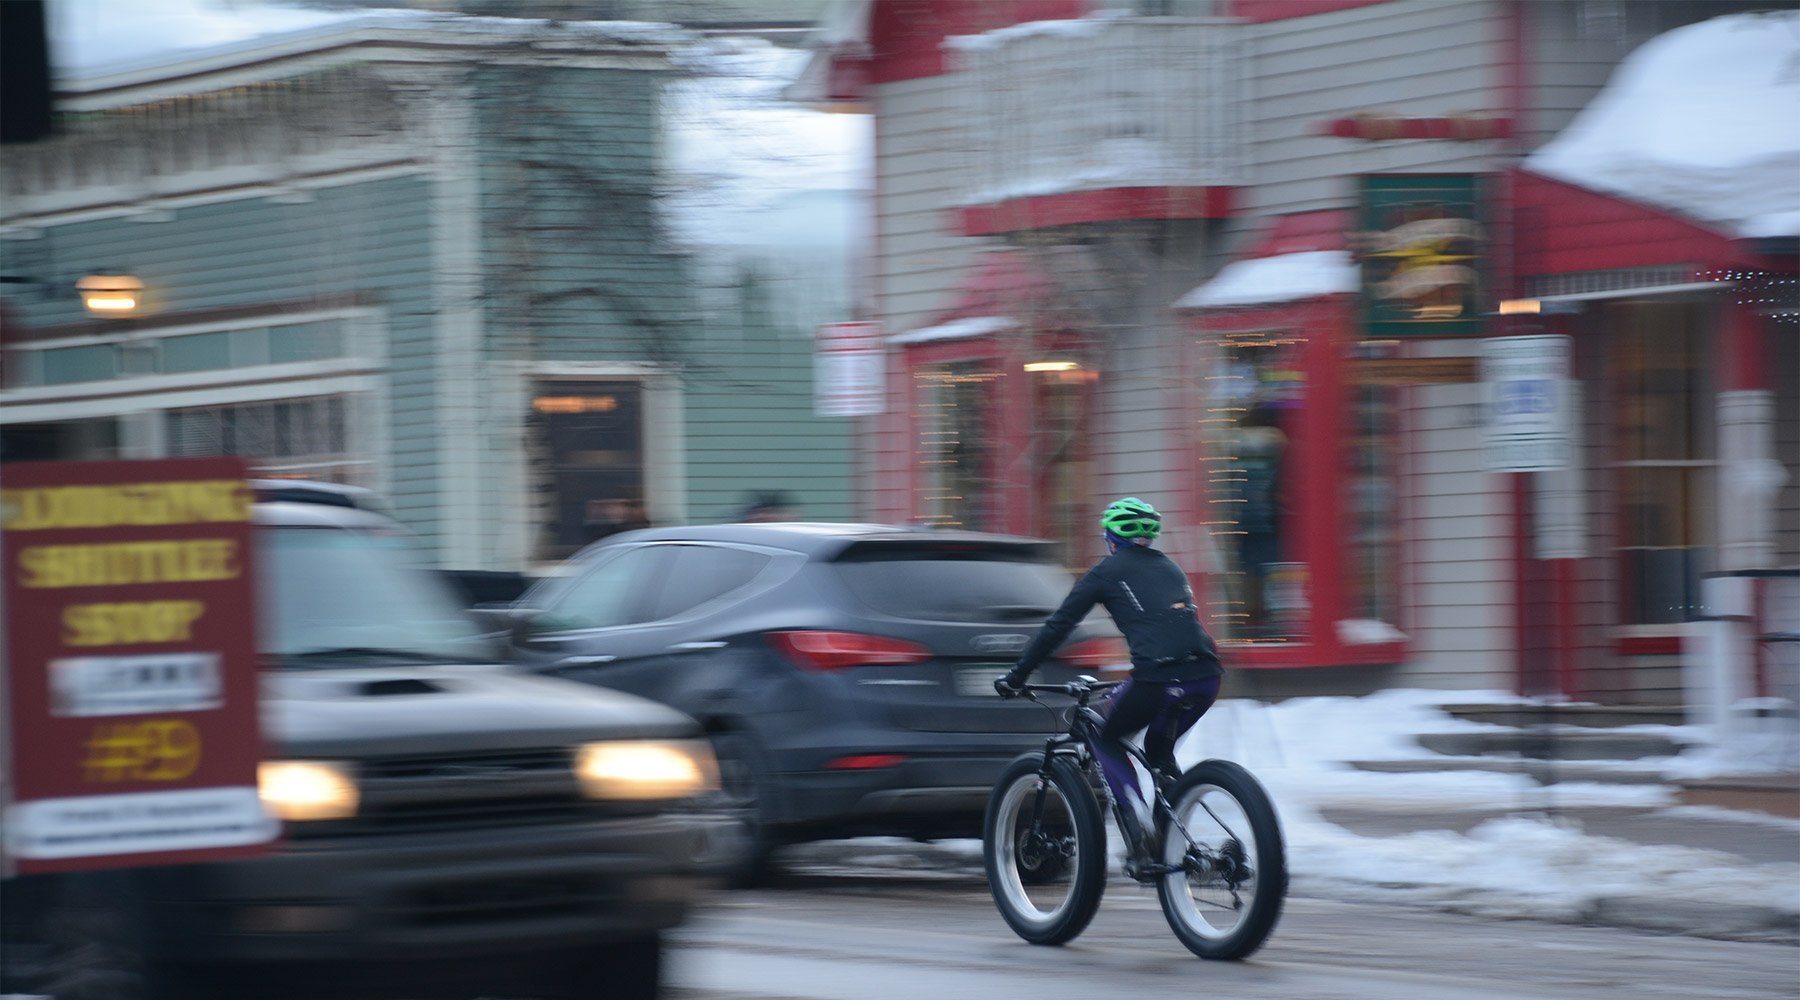 bikes in town of Breckenridge main street